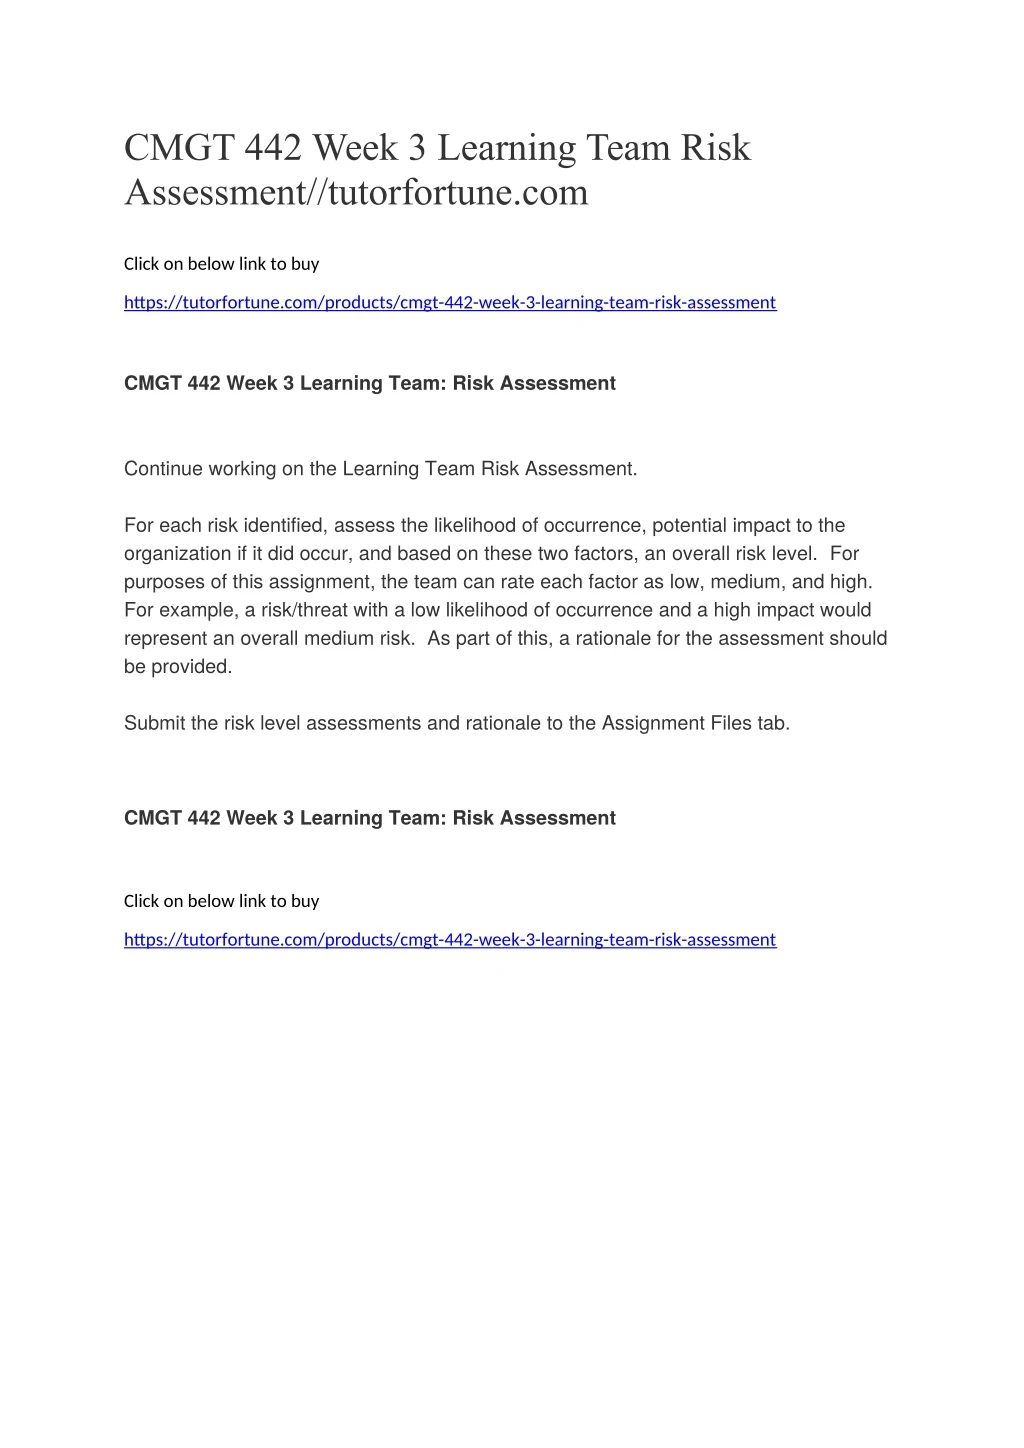 cmgt 442 week 3 learning team risk assessment